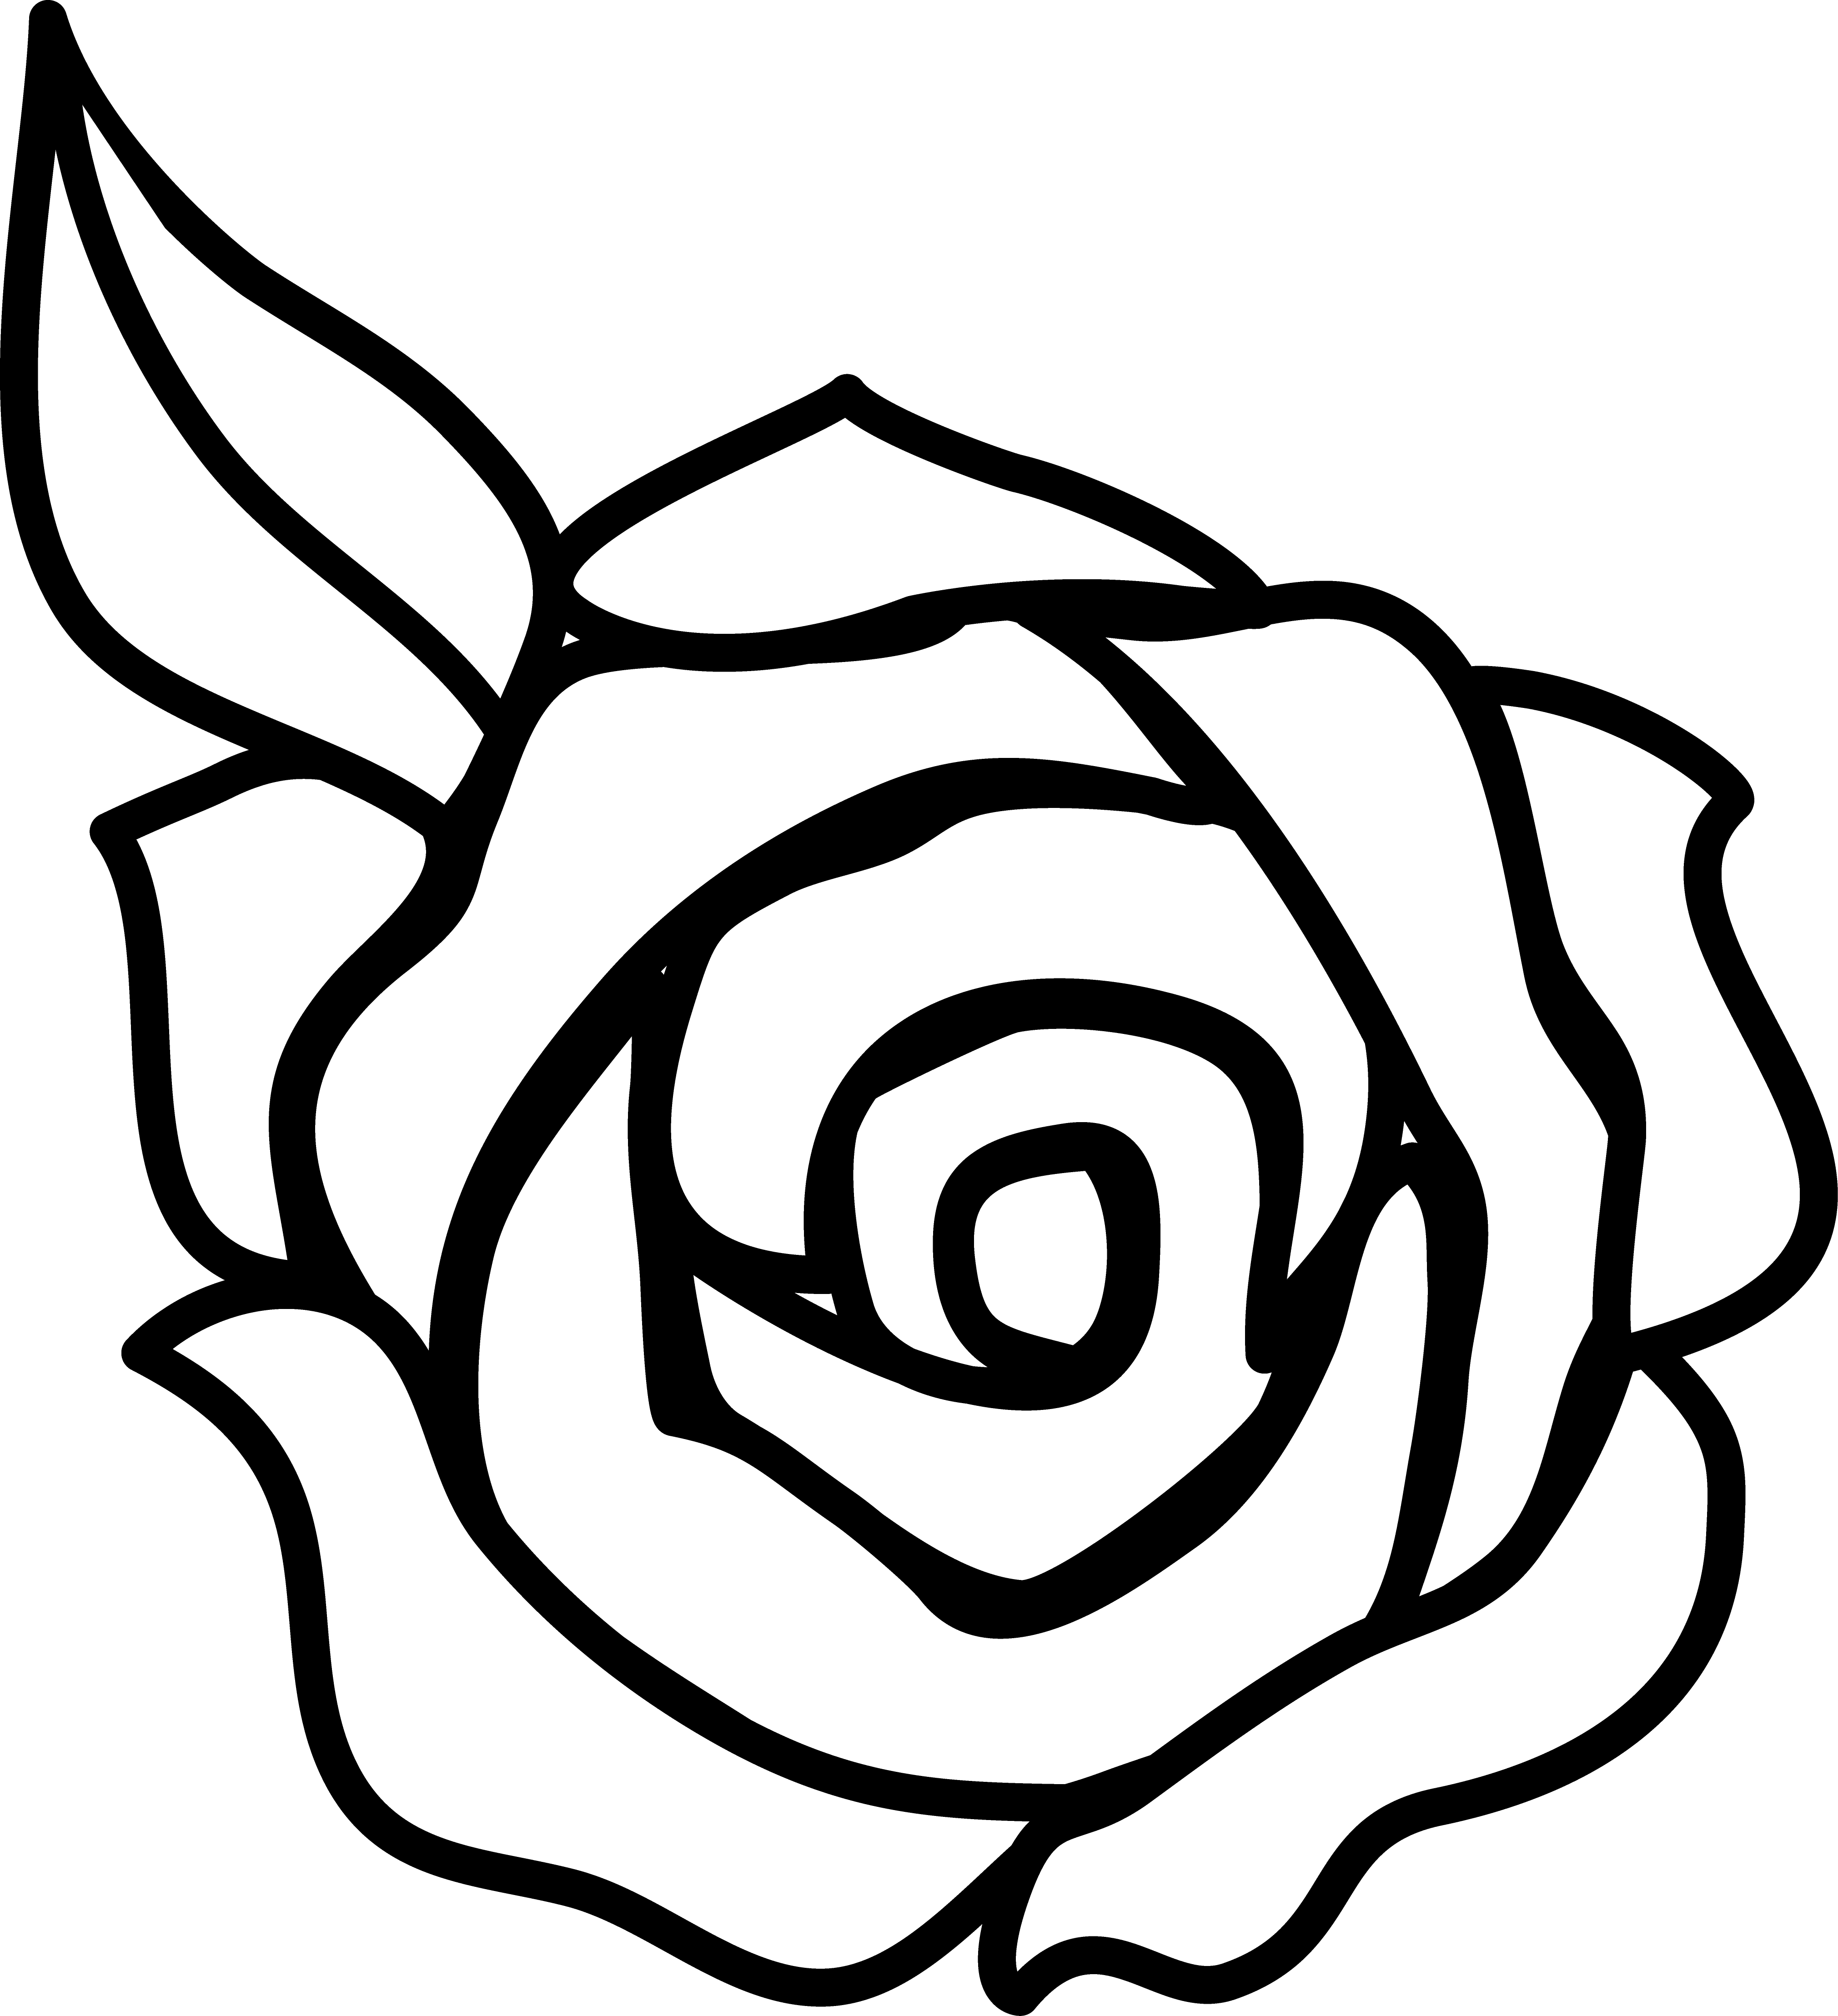 Rose Outline Clipart